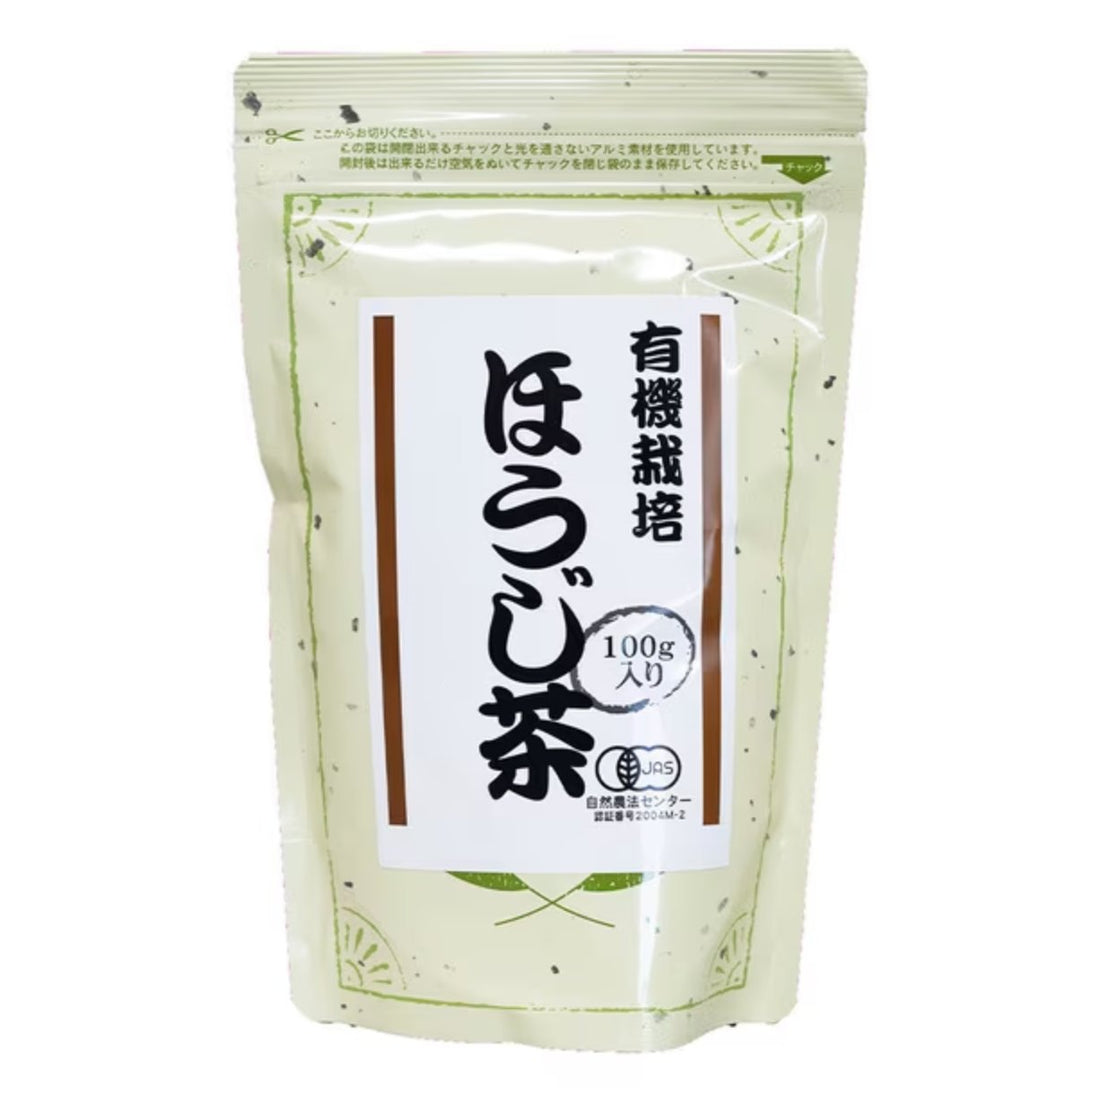 Hagiri JAS organically grown roasted green tea 100g - NihonMura